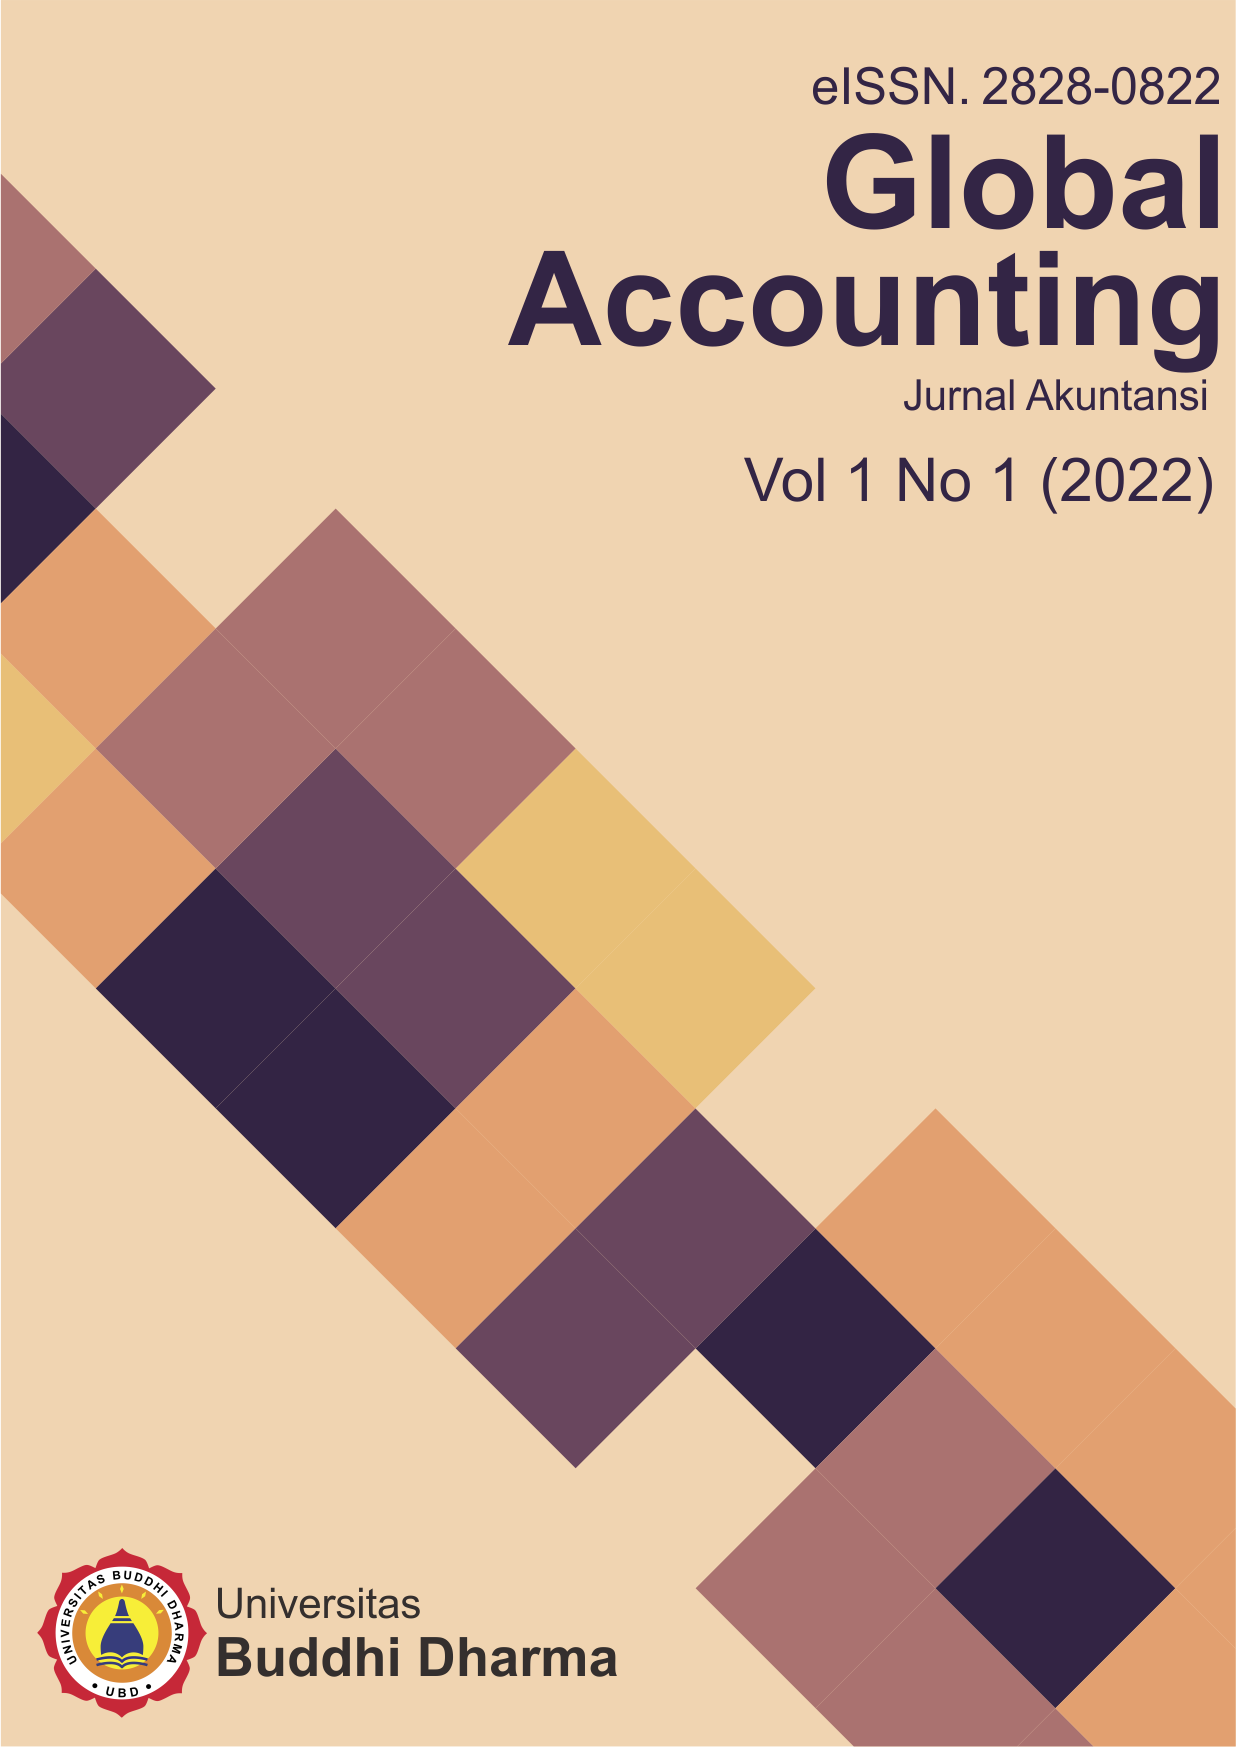 					View Vol. 1 No. 1 (2022): Global Accounting
				